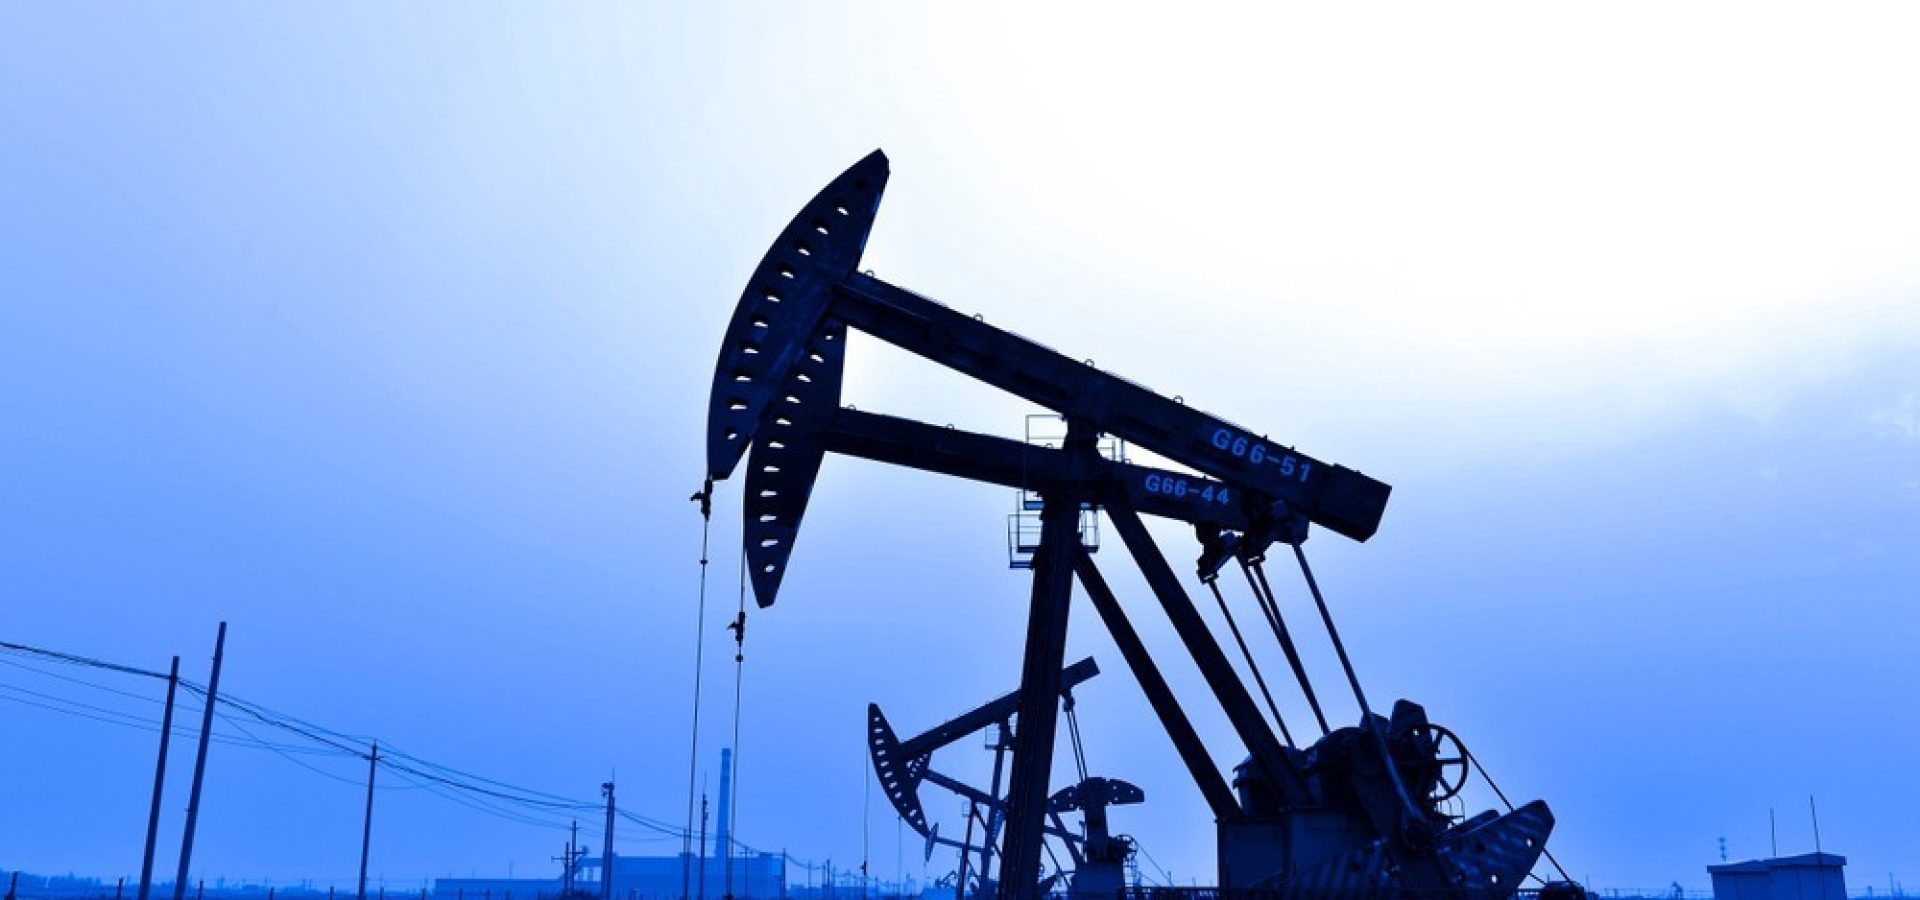 Oil prices sank 4% as coronavirus surge weighs on demand